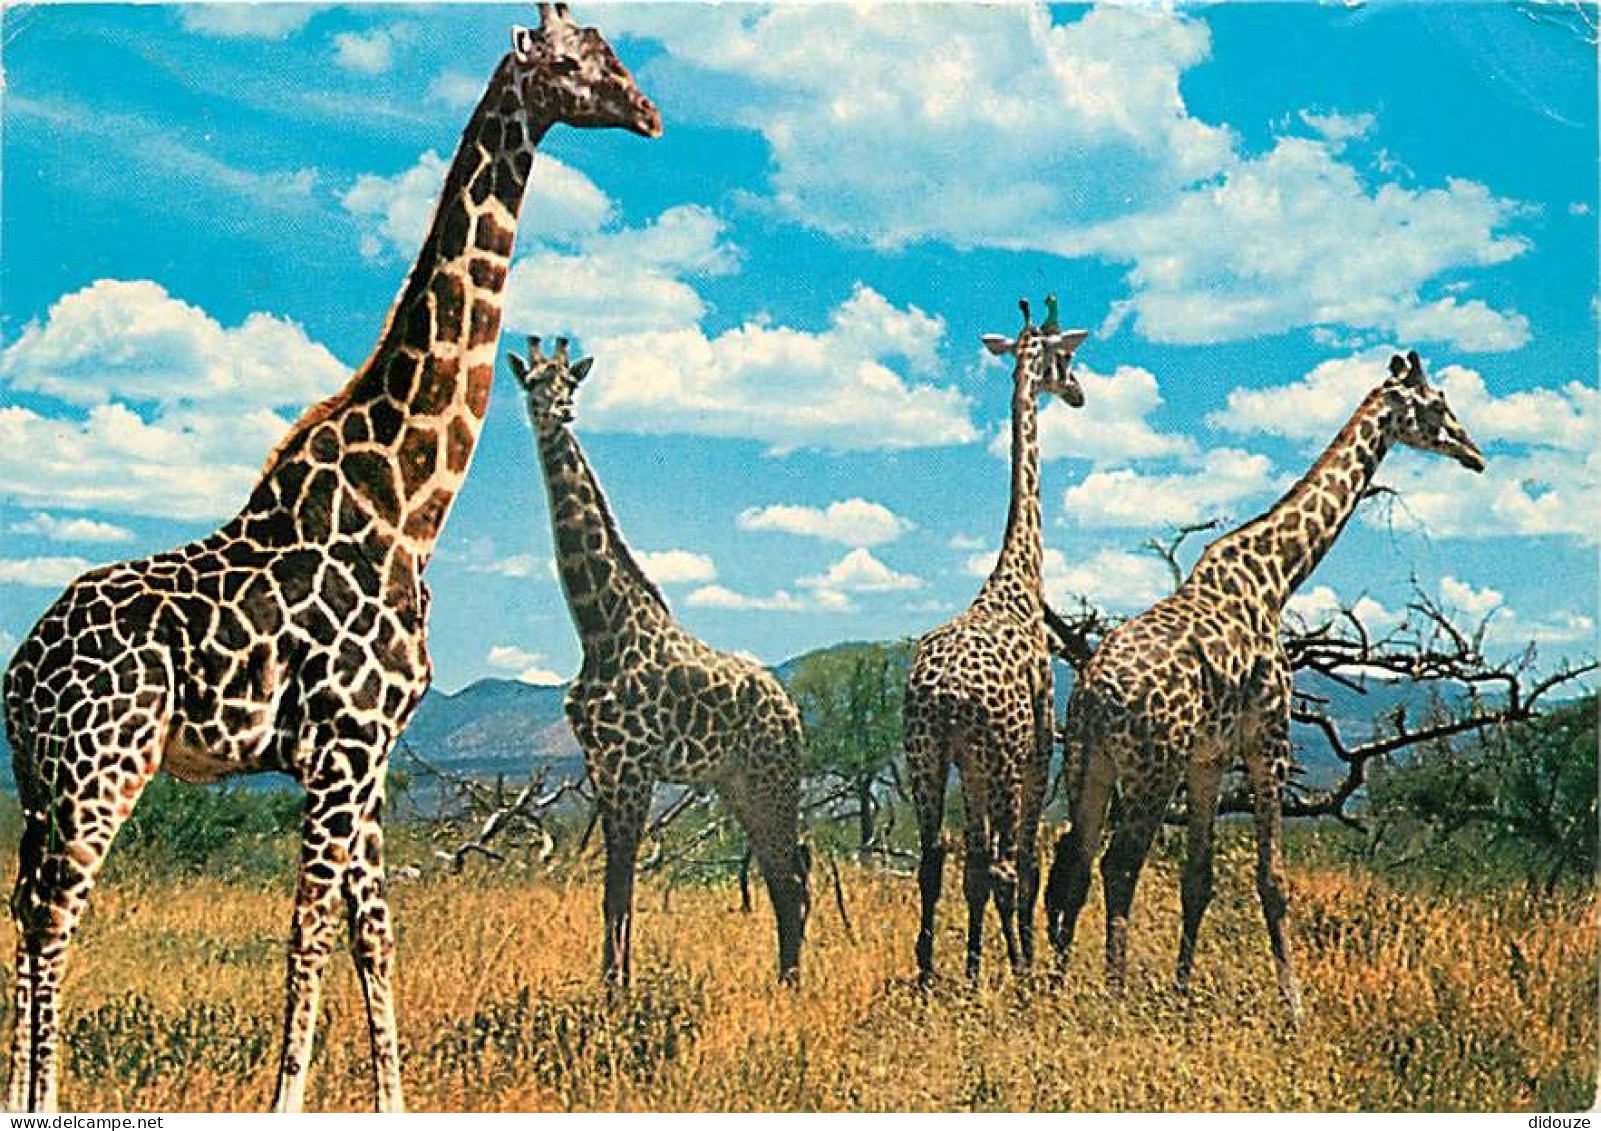 Animaux - Girafes - Wildlife - East Africa - Voir Timbre Du Kenya - Etat Léger Pli Visible - CPM - Voir Scans Recto-Vers - Giraffen